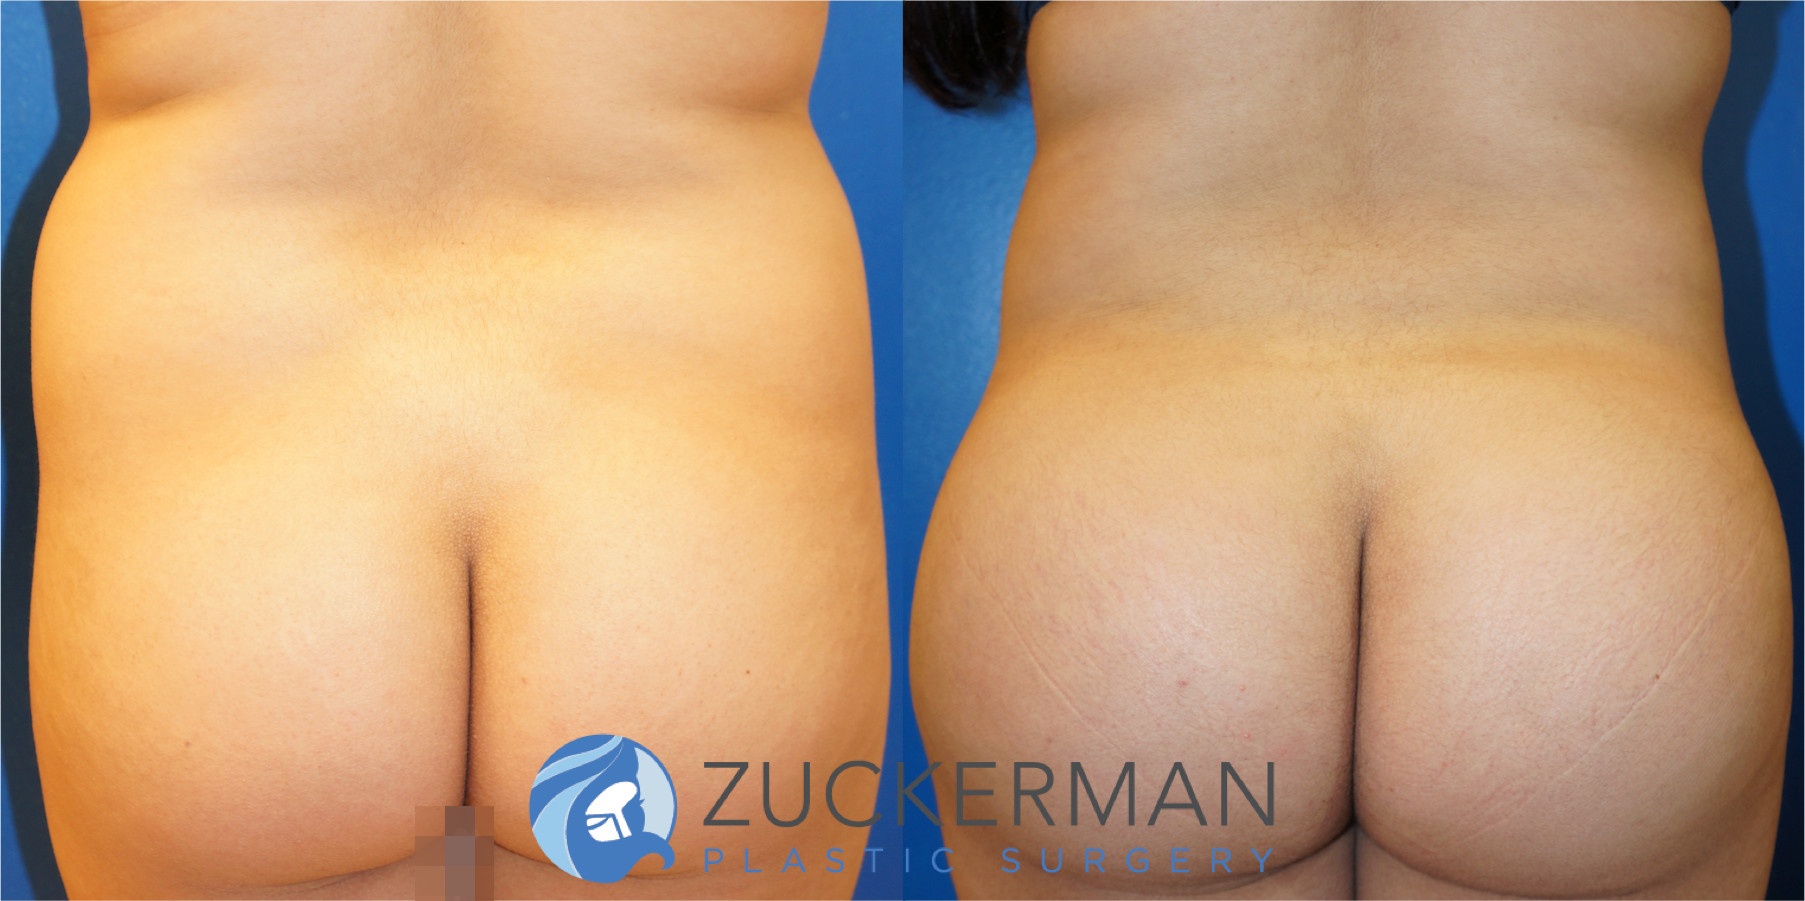 liposuction, abdomen, flanks, lower back, lipo 360, 3, posterior view, joshua zuckerman md, nyc